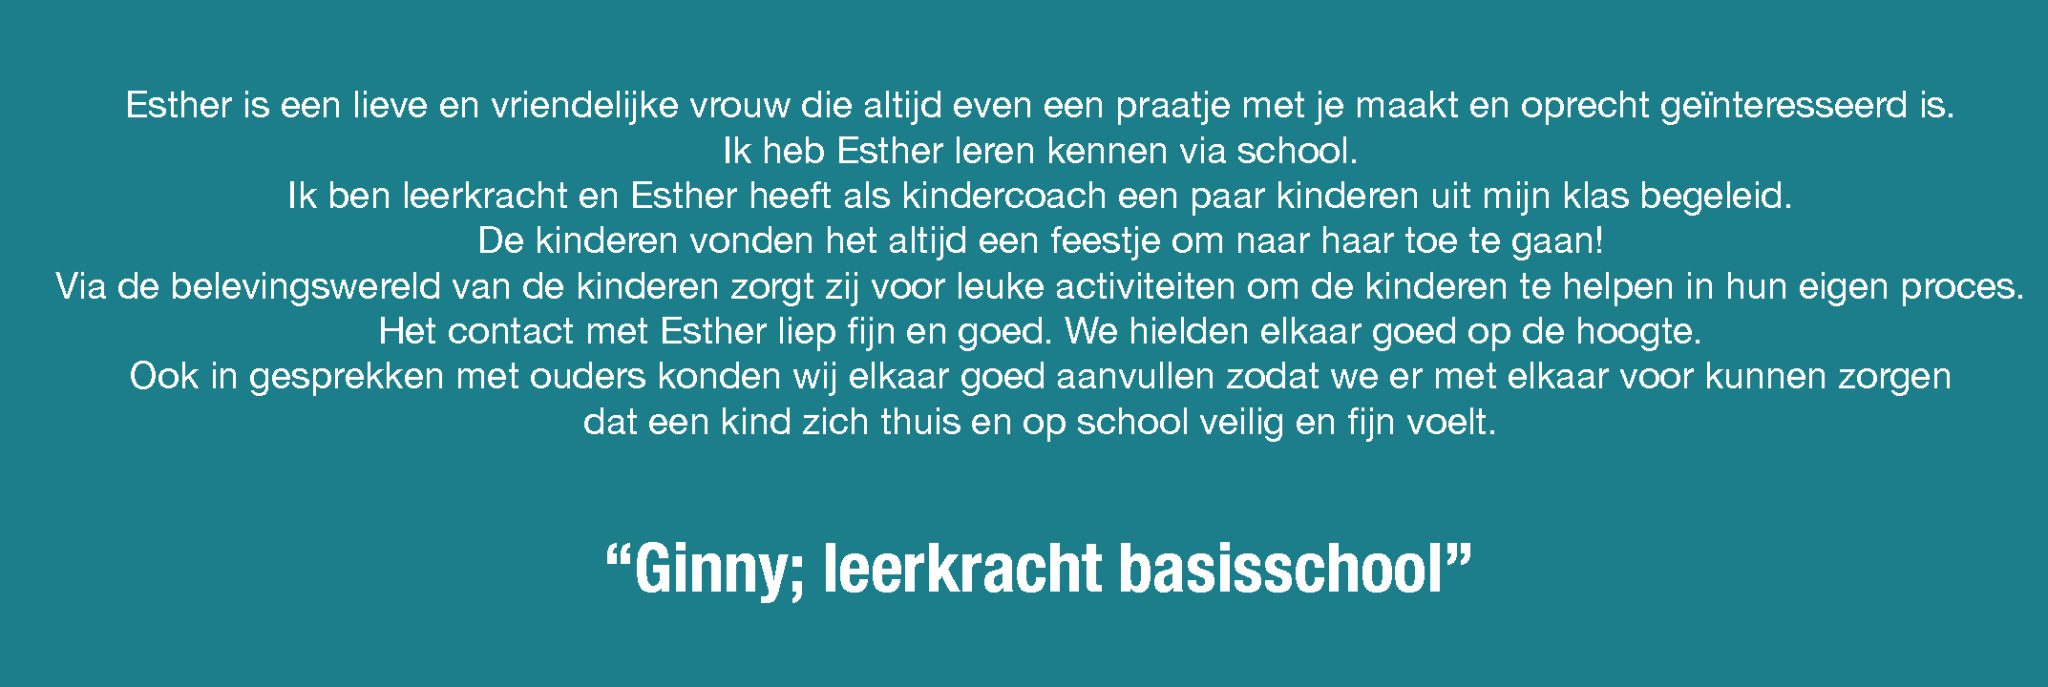 Ginny Basisschool